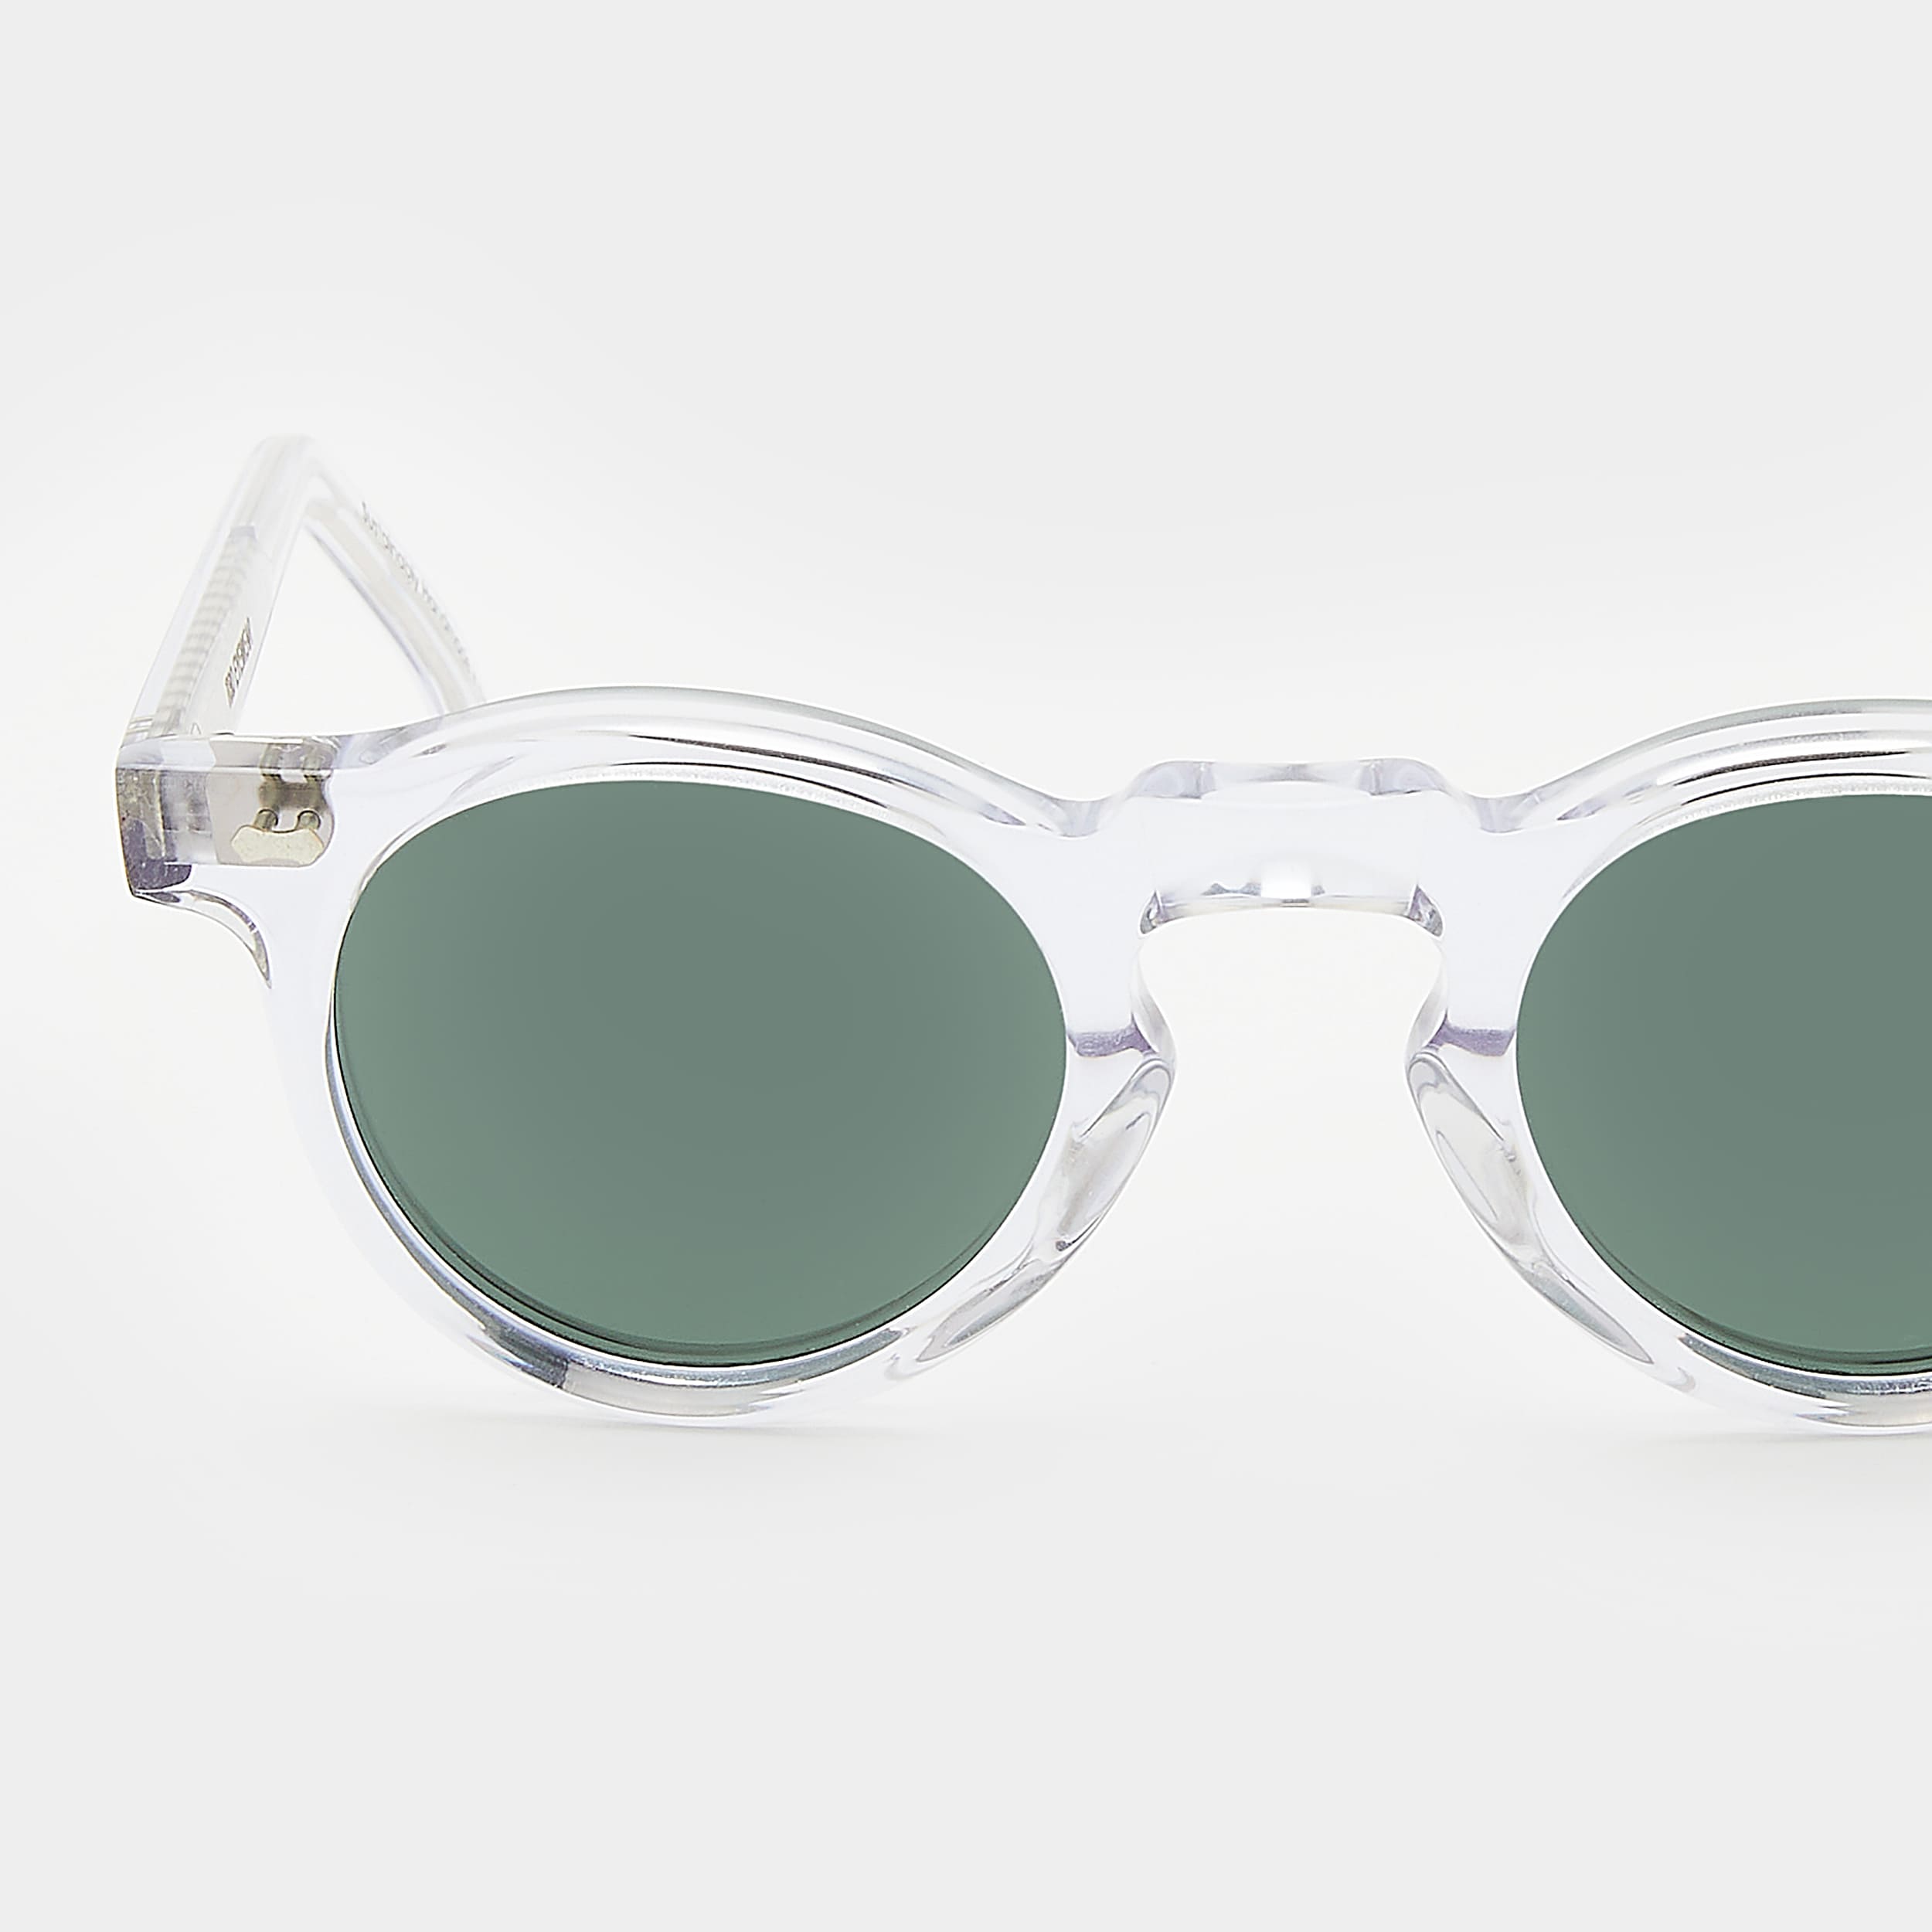 sunglasses-welt-eco-transparent-bottle-green-sustainable-tbd-eyewear-lens